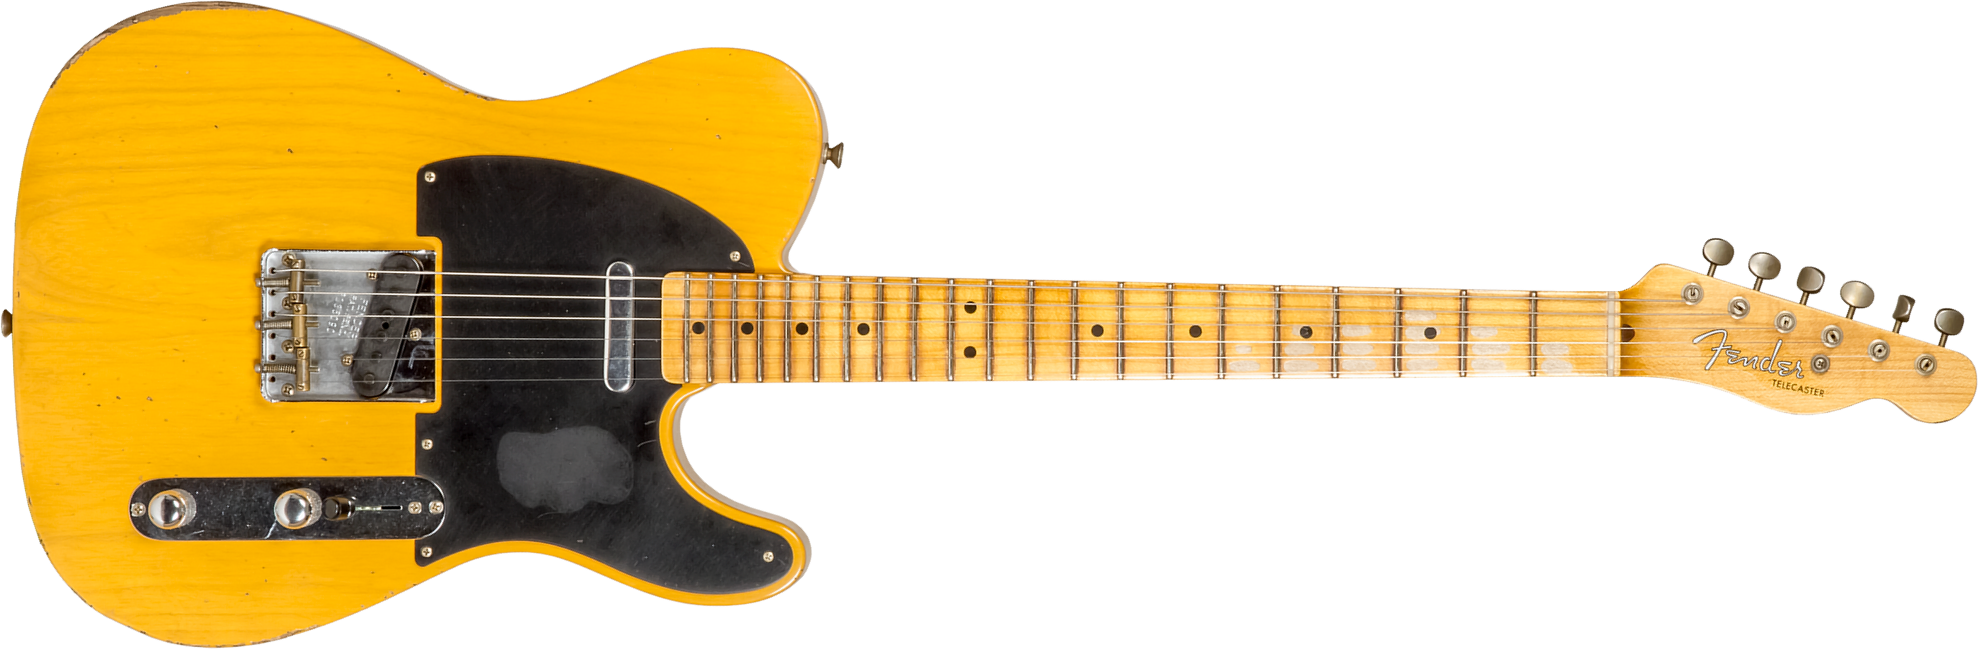 Fender Custom Shop Tele 1952 2s Ht Mn #r135090 - Relic Aged Butterscotch Blonde - Guitarra eléctrica con forma de tel - Main picture